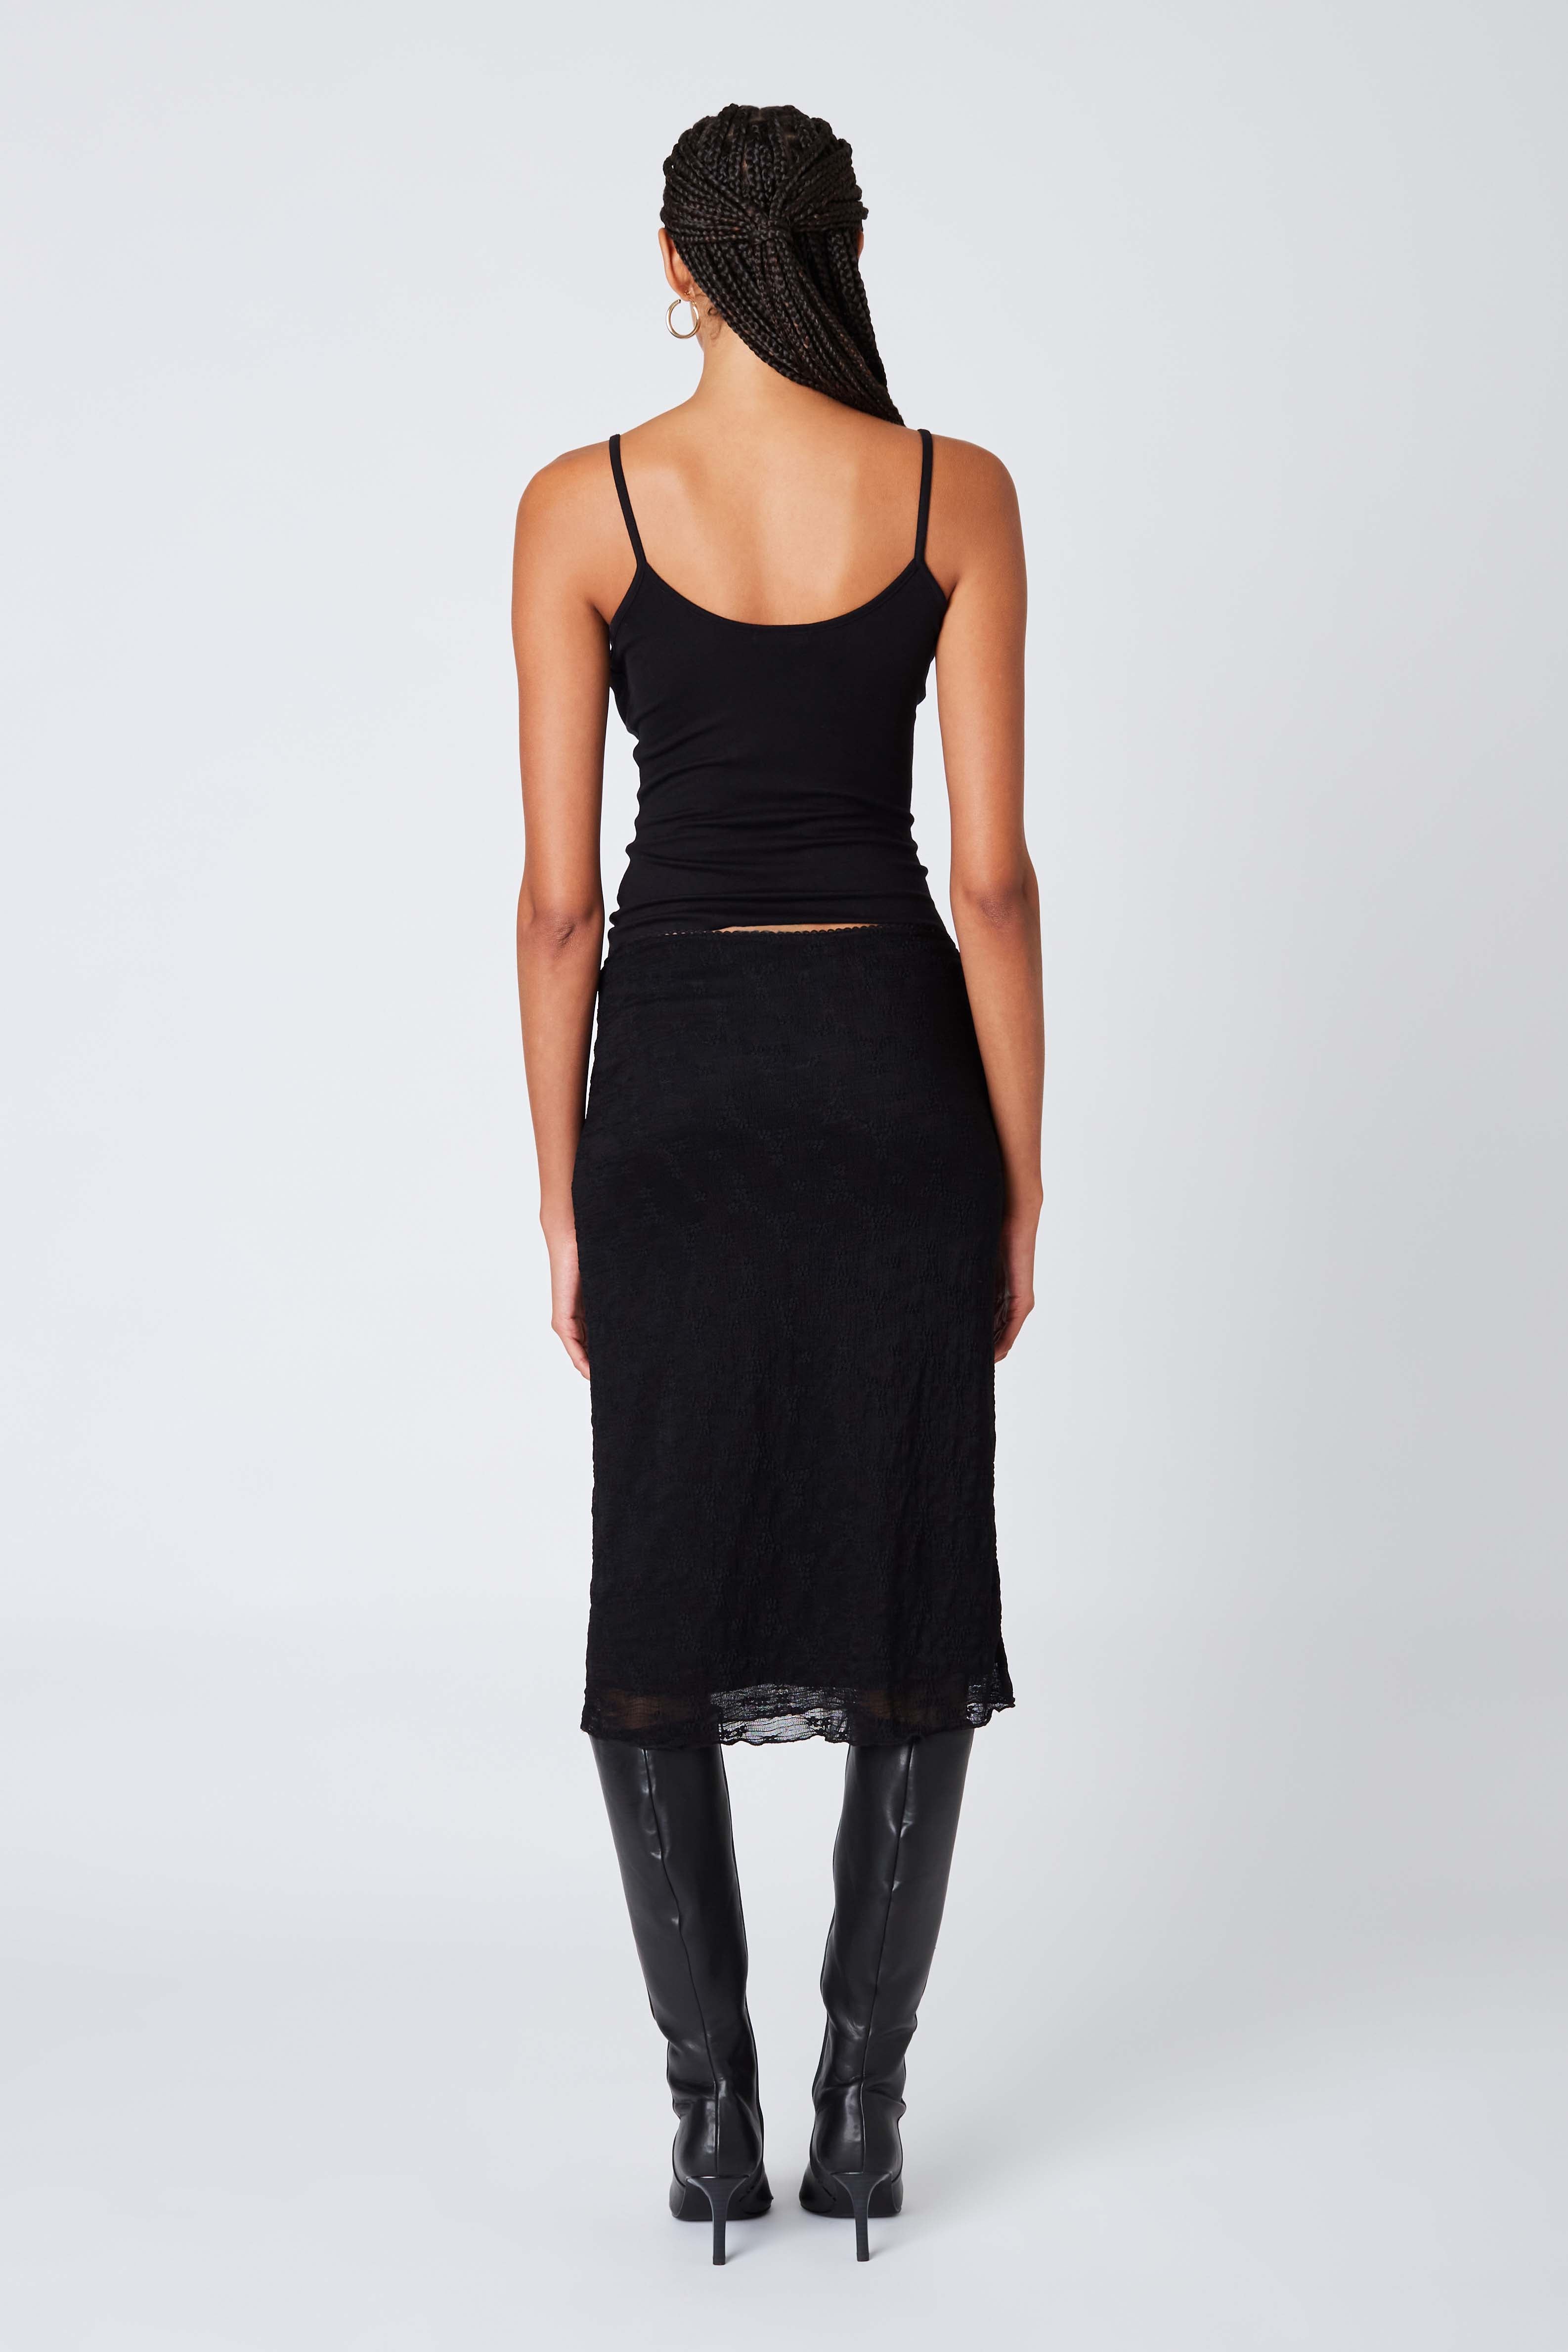 Sheer Midi Skirt in Black Back View